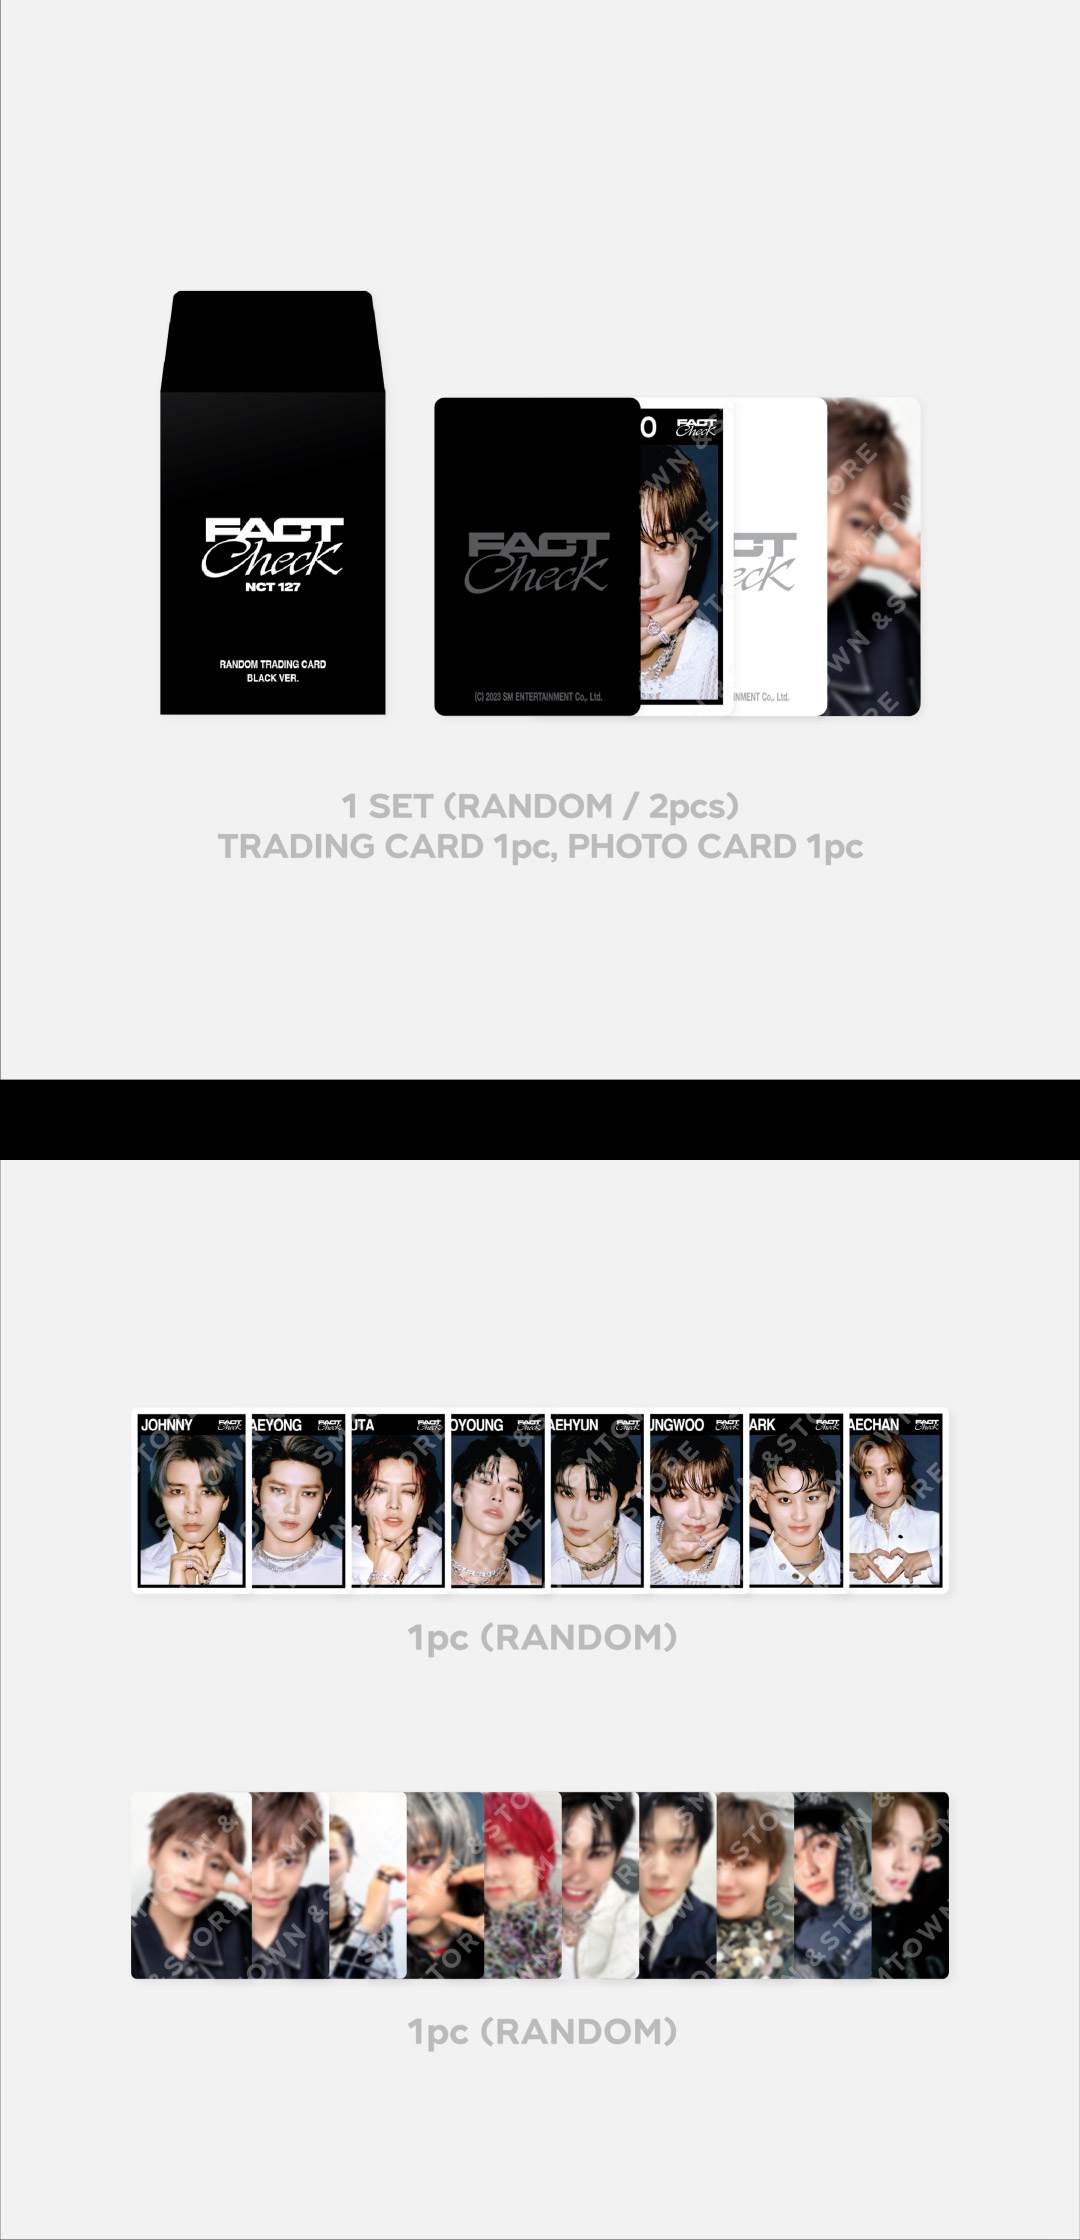 NCT 127 - Trading Card Set [FACT CHECK] (Black)